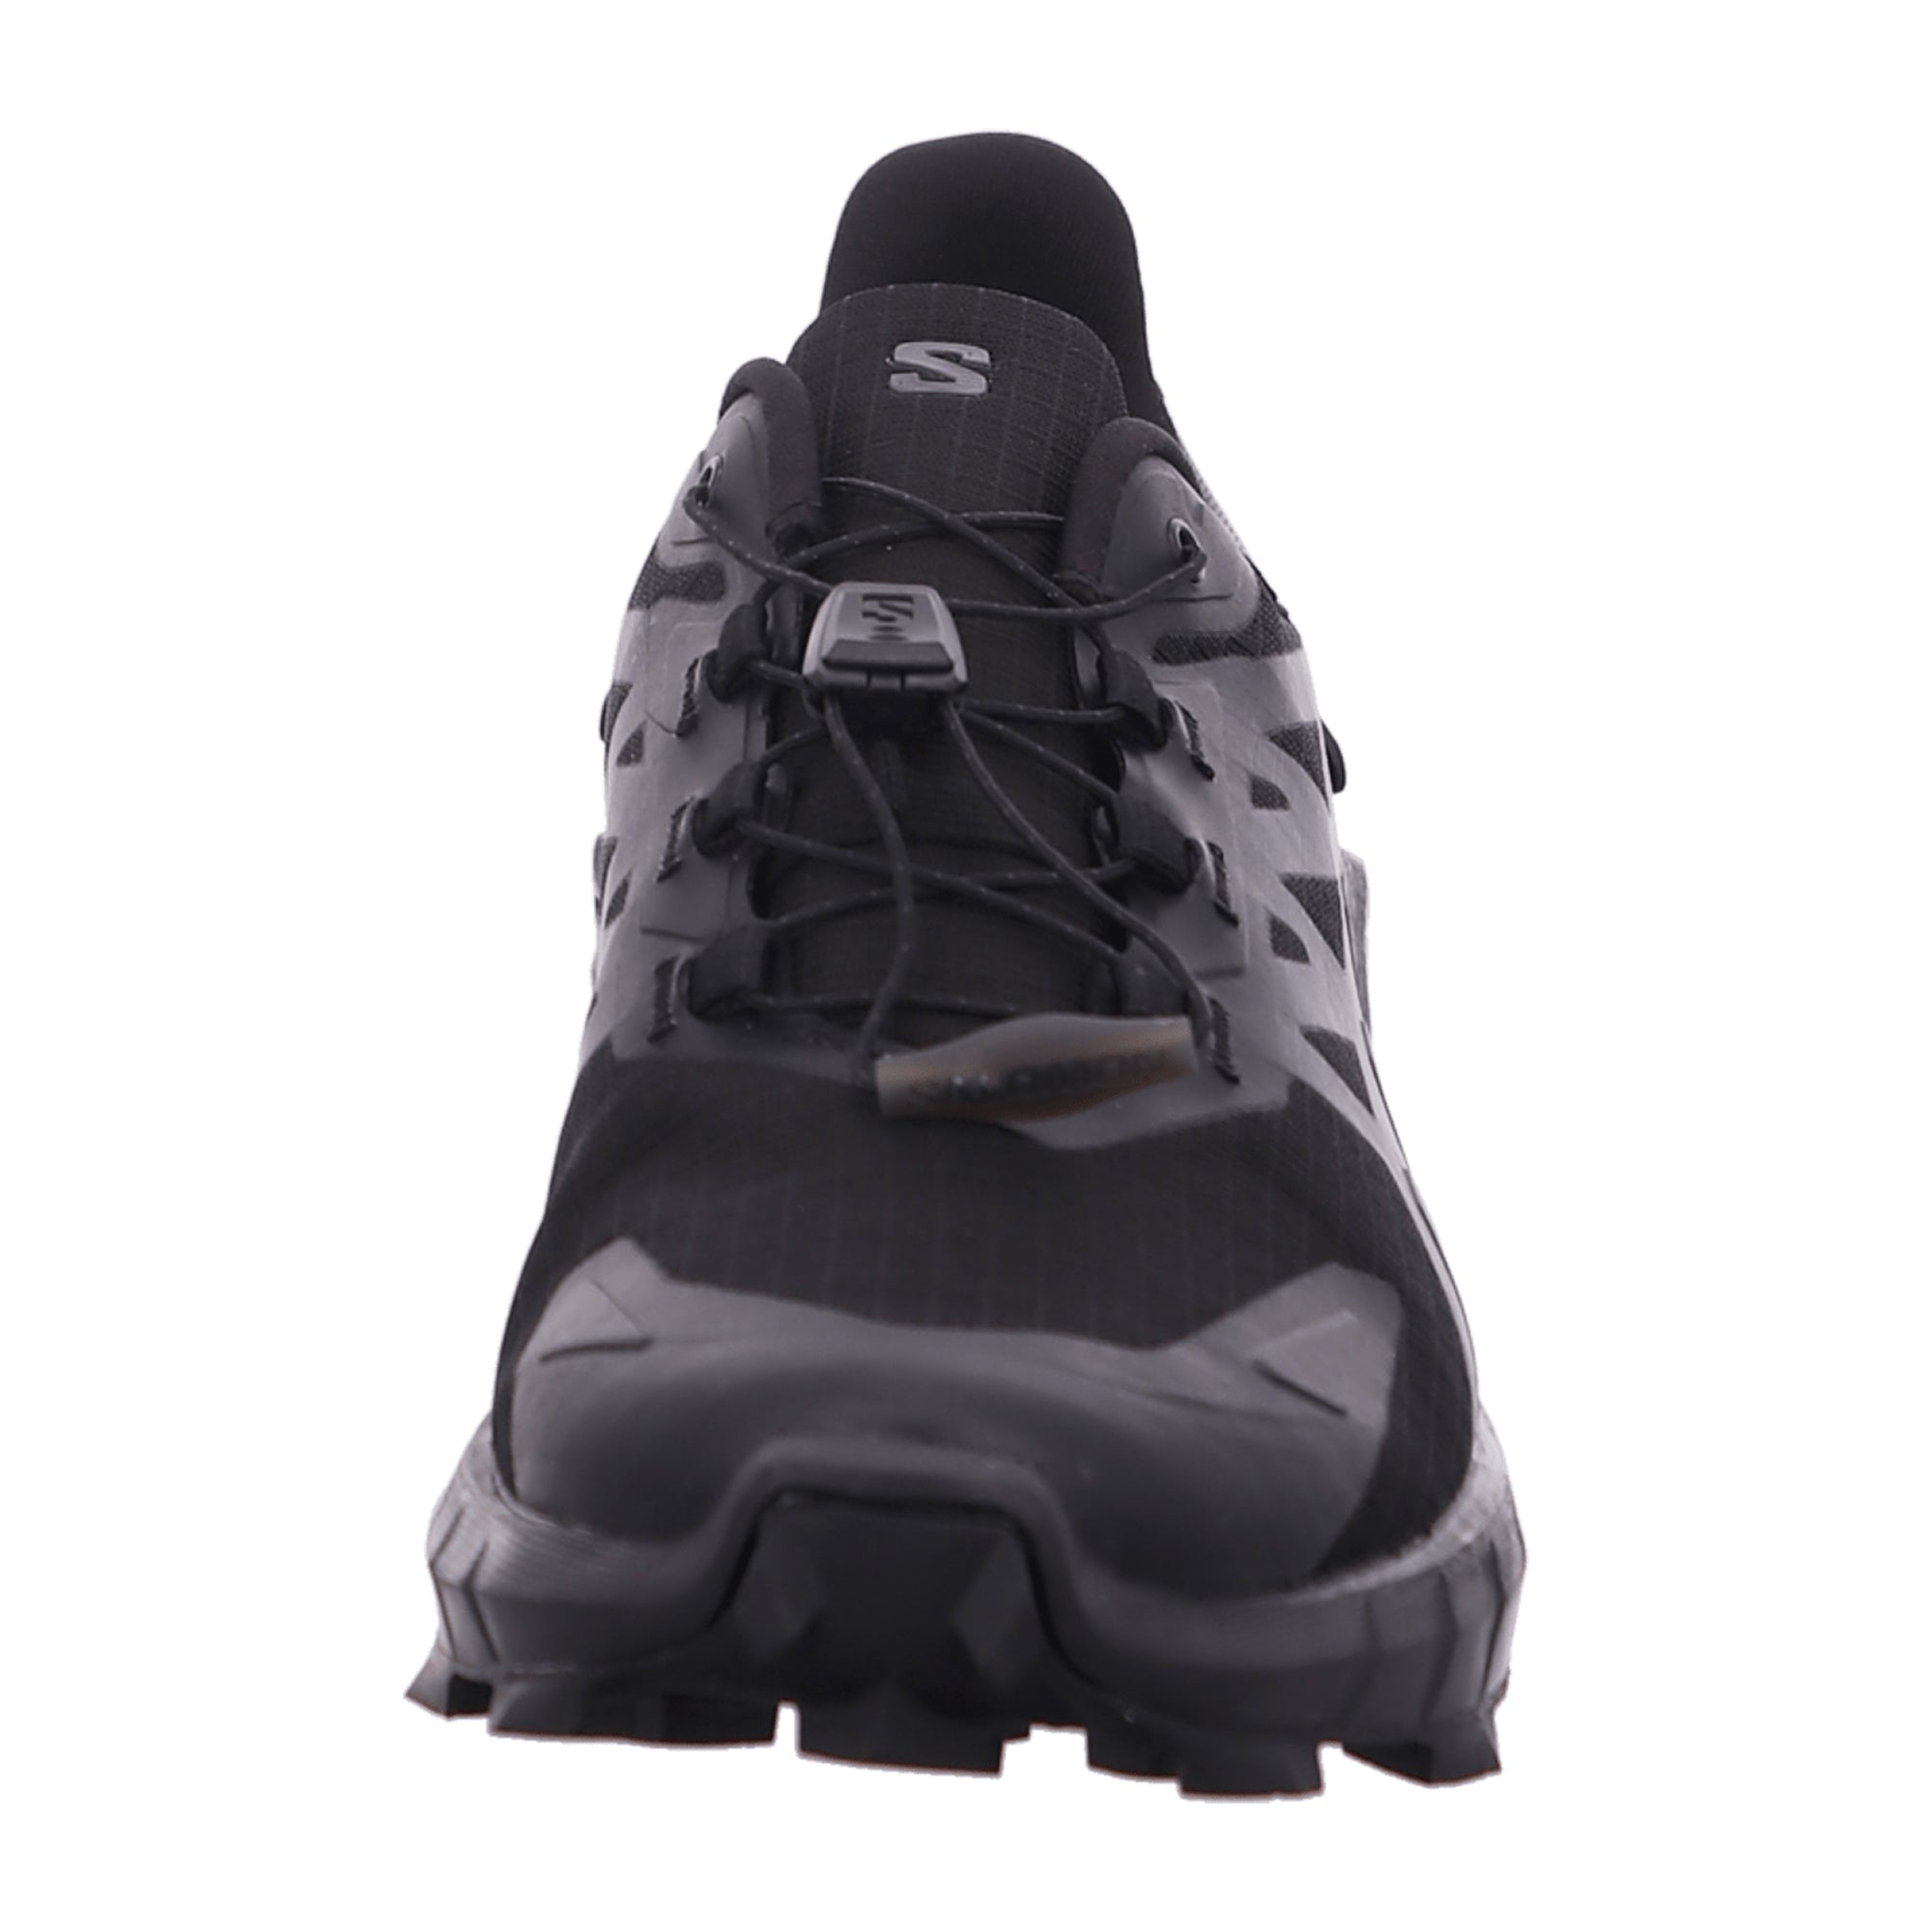 Salomon SUPERCROSS 4 GTX W Black/Bl for women, black, shoes